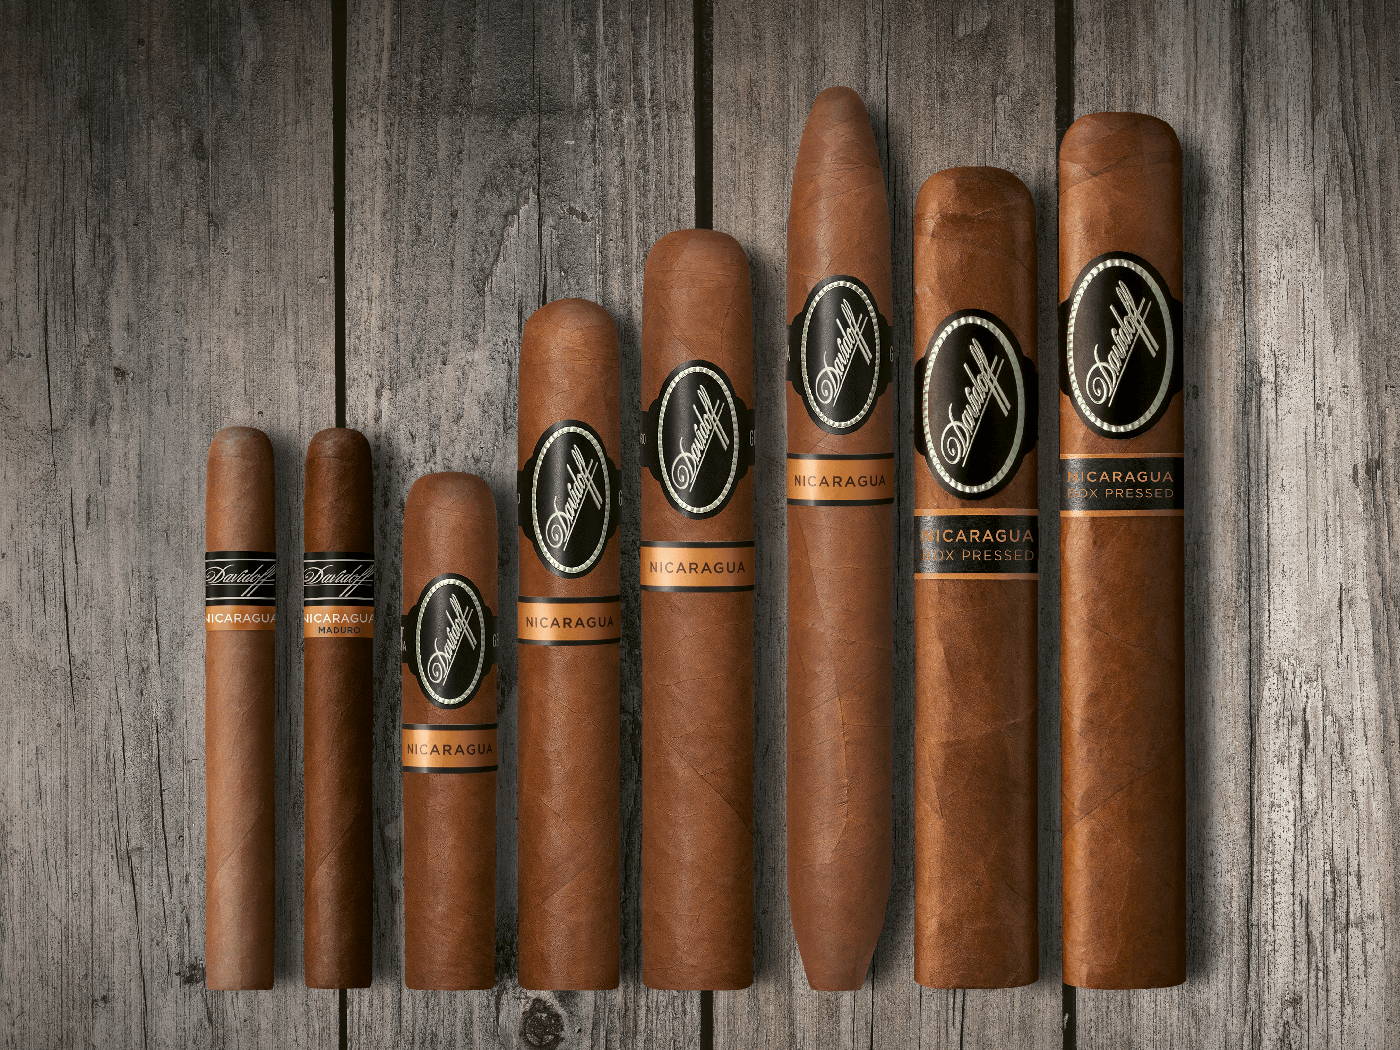 The whole Davidoff Nicaragua cigars line-up.